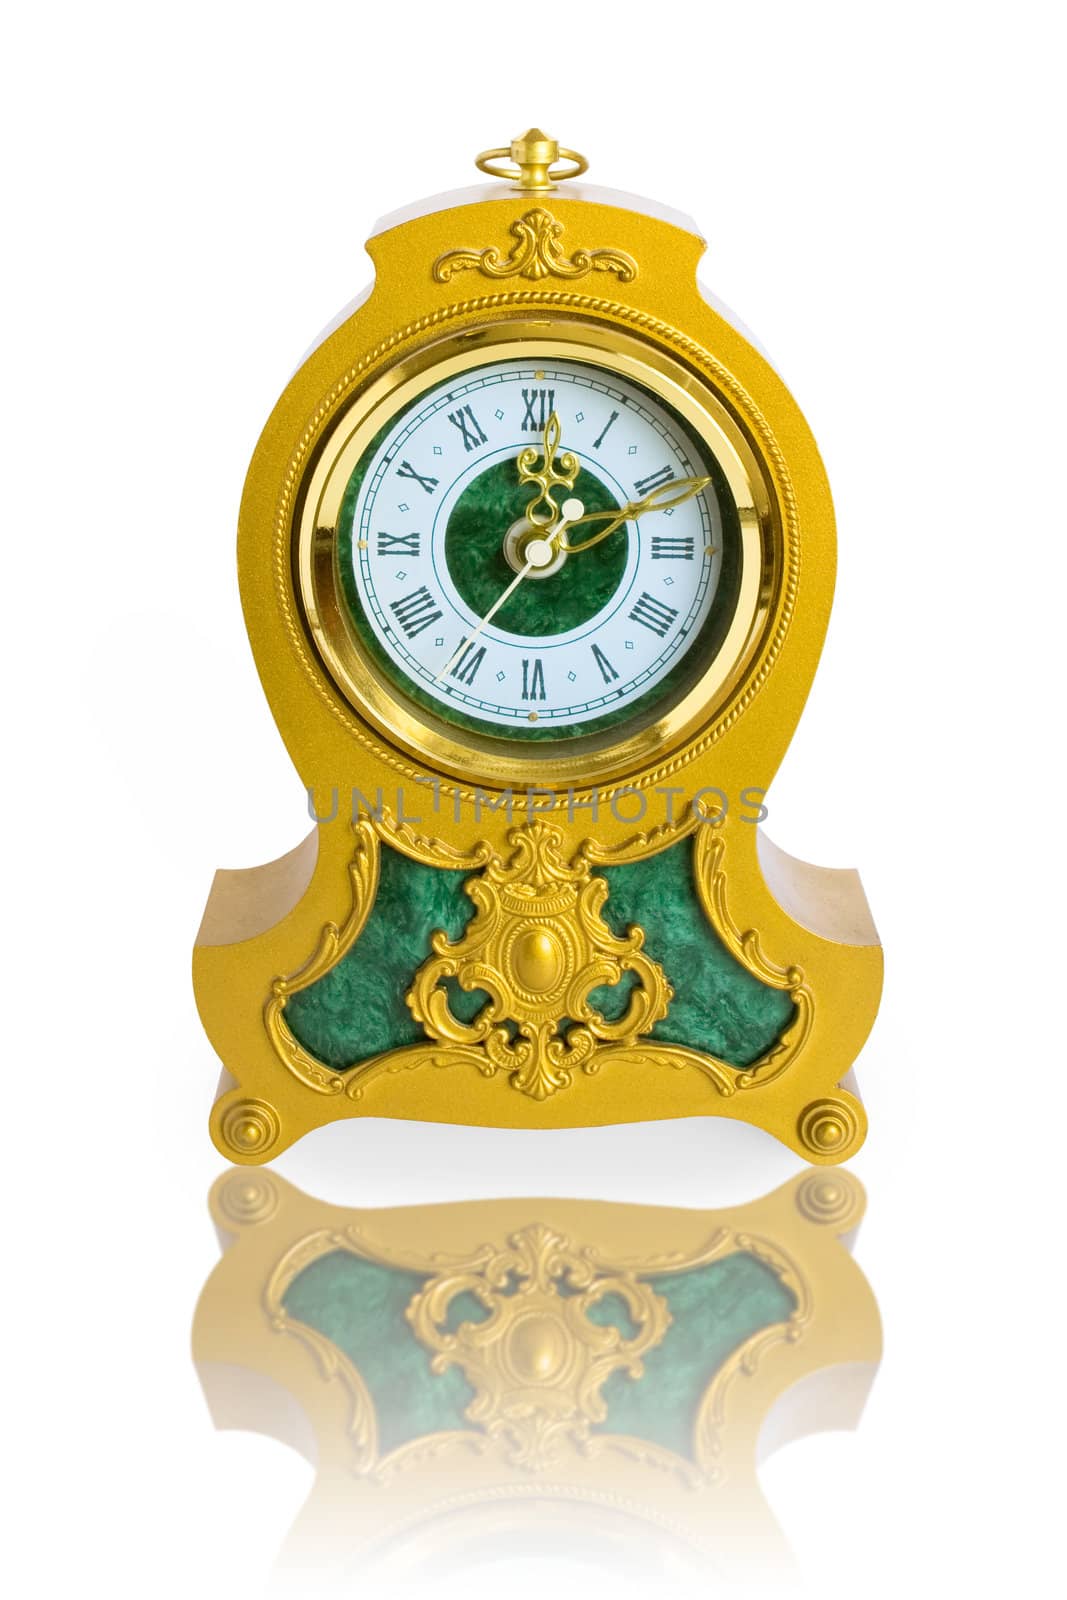 Vintage clock by dimol